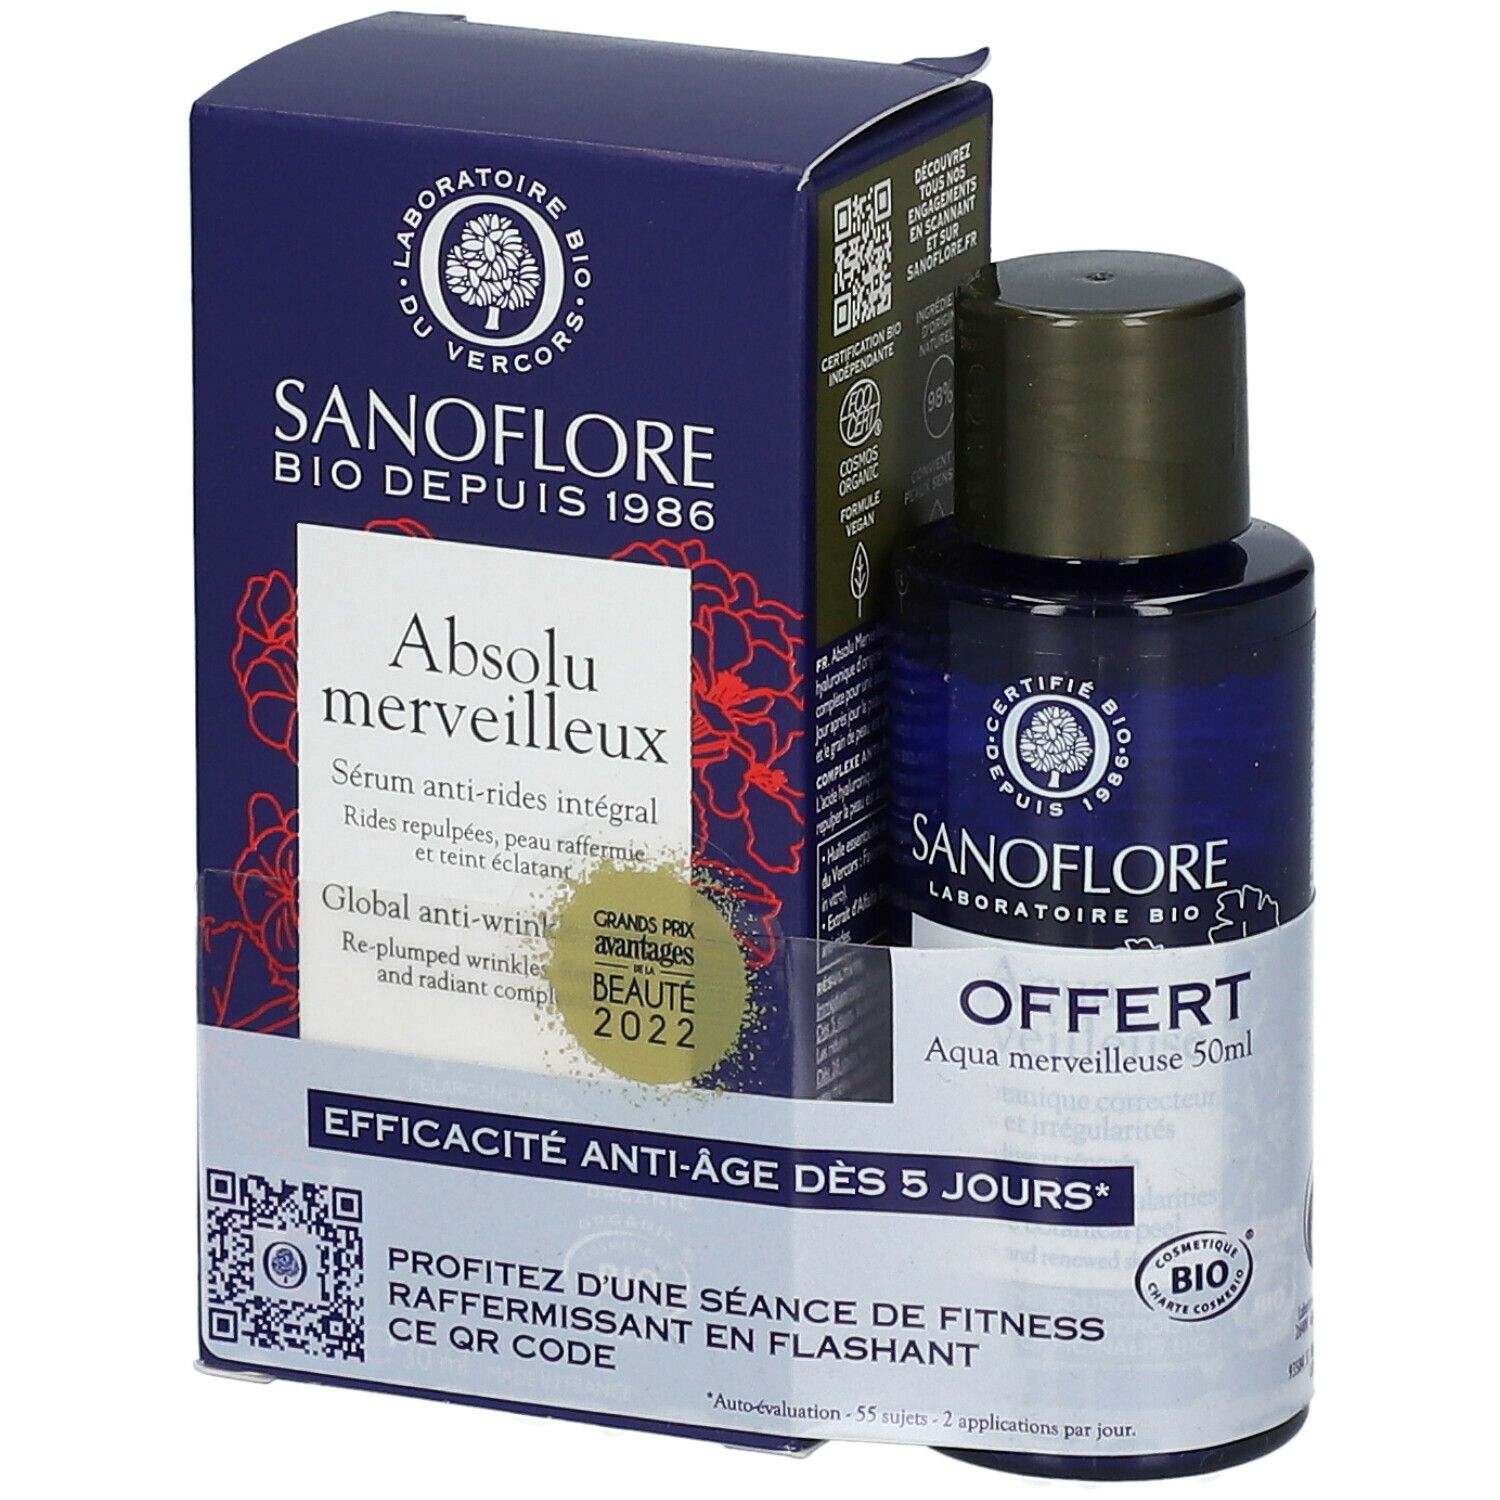 Sanoflore Absolu Merveilleux + Mini Aqua Merveilleuse Certifié Bio